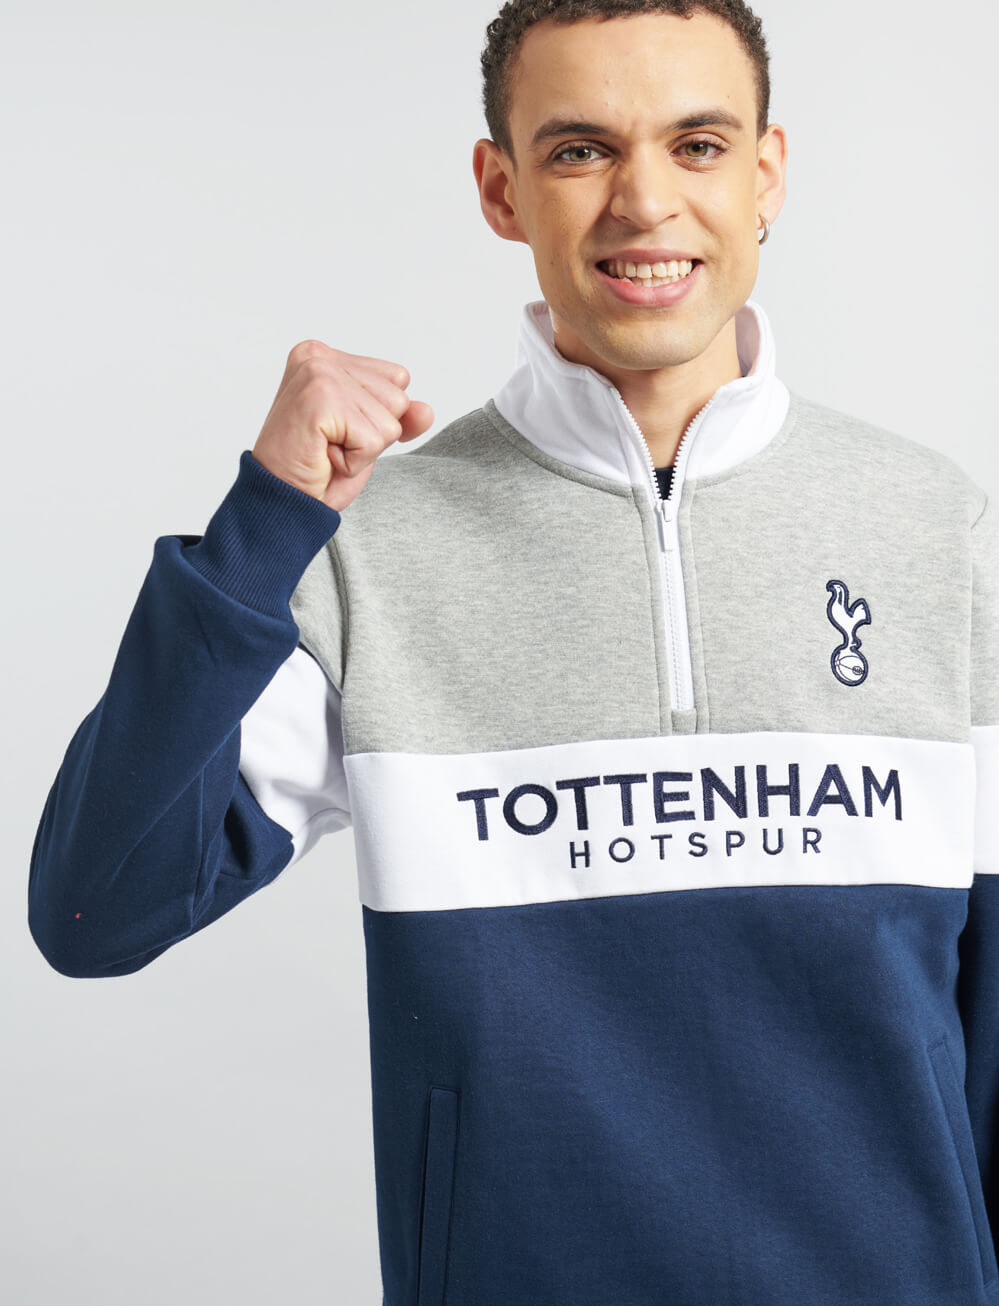 Official Tottenham 1/4 Zip Sweat - The World Football Store